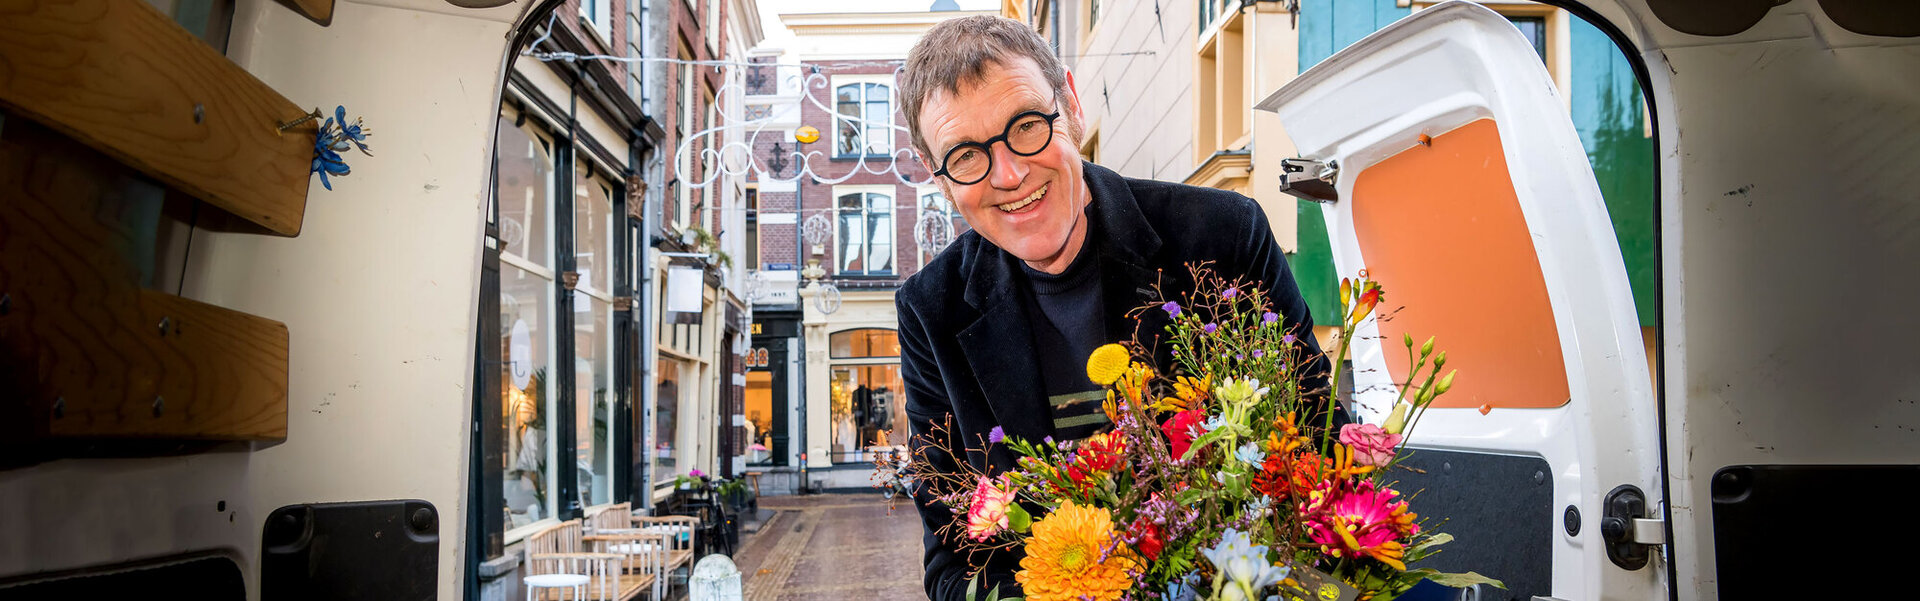 The floral art of Wim van Assem